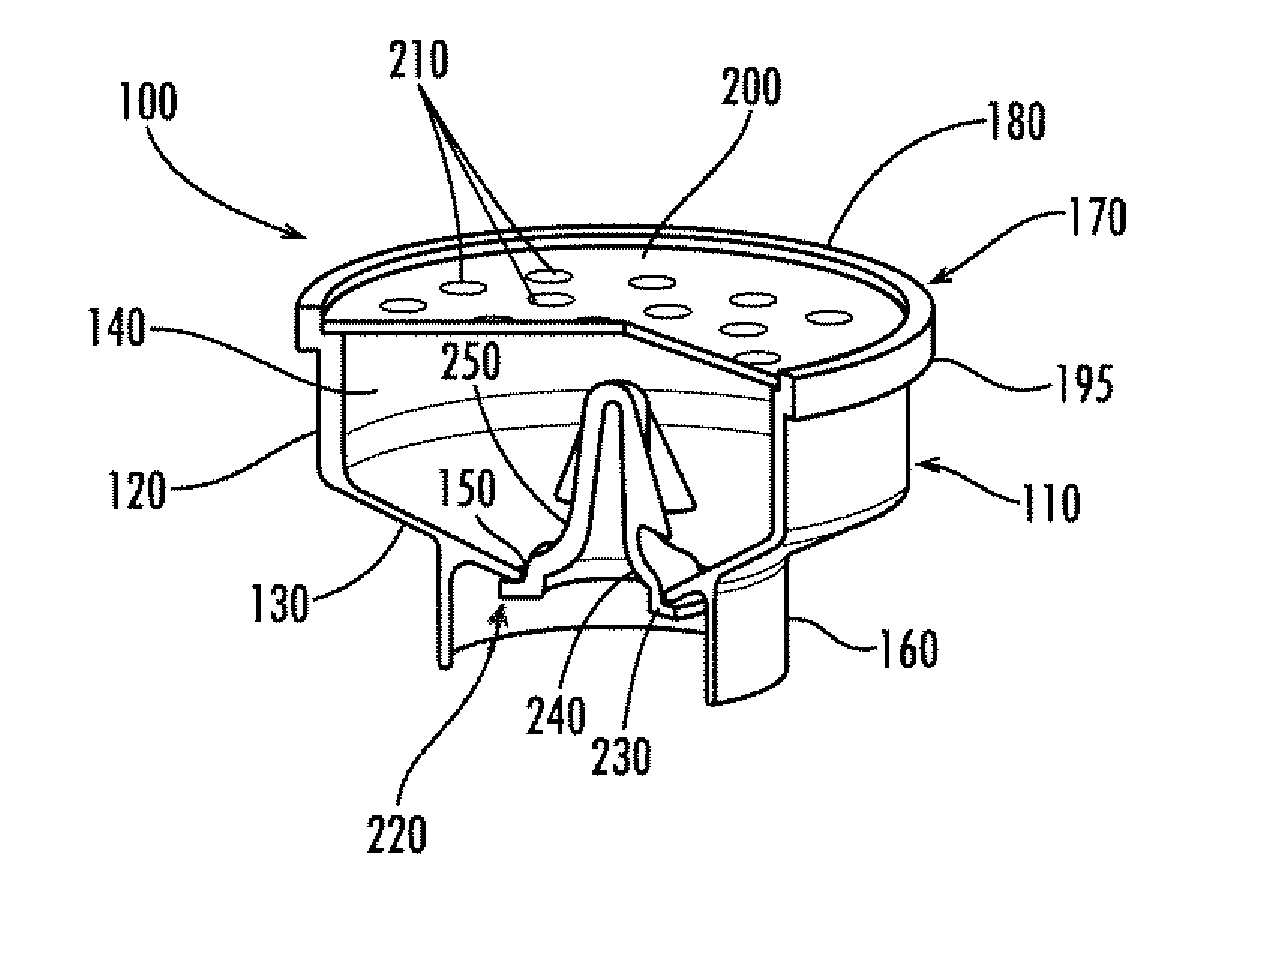 Pod for Dispersible Materials